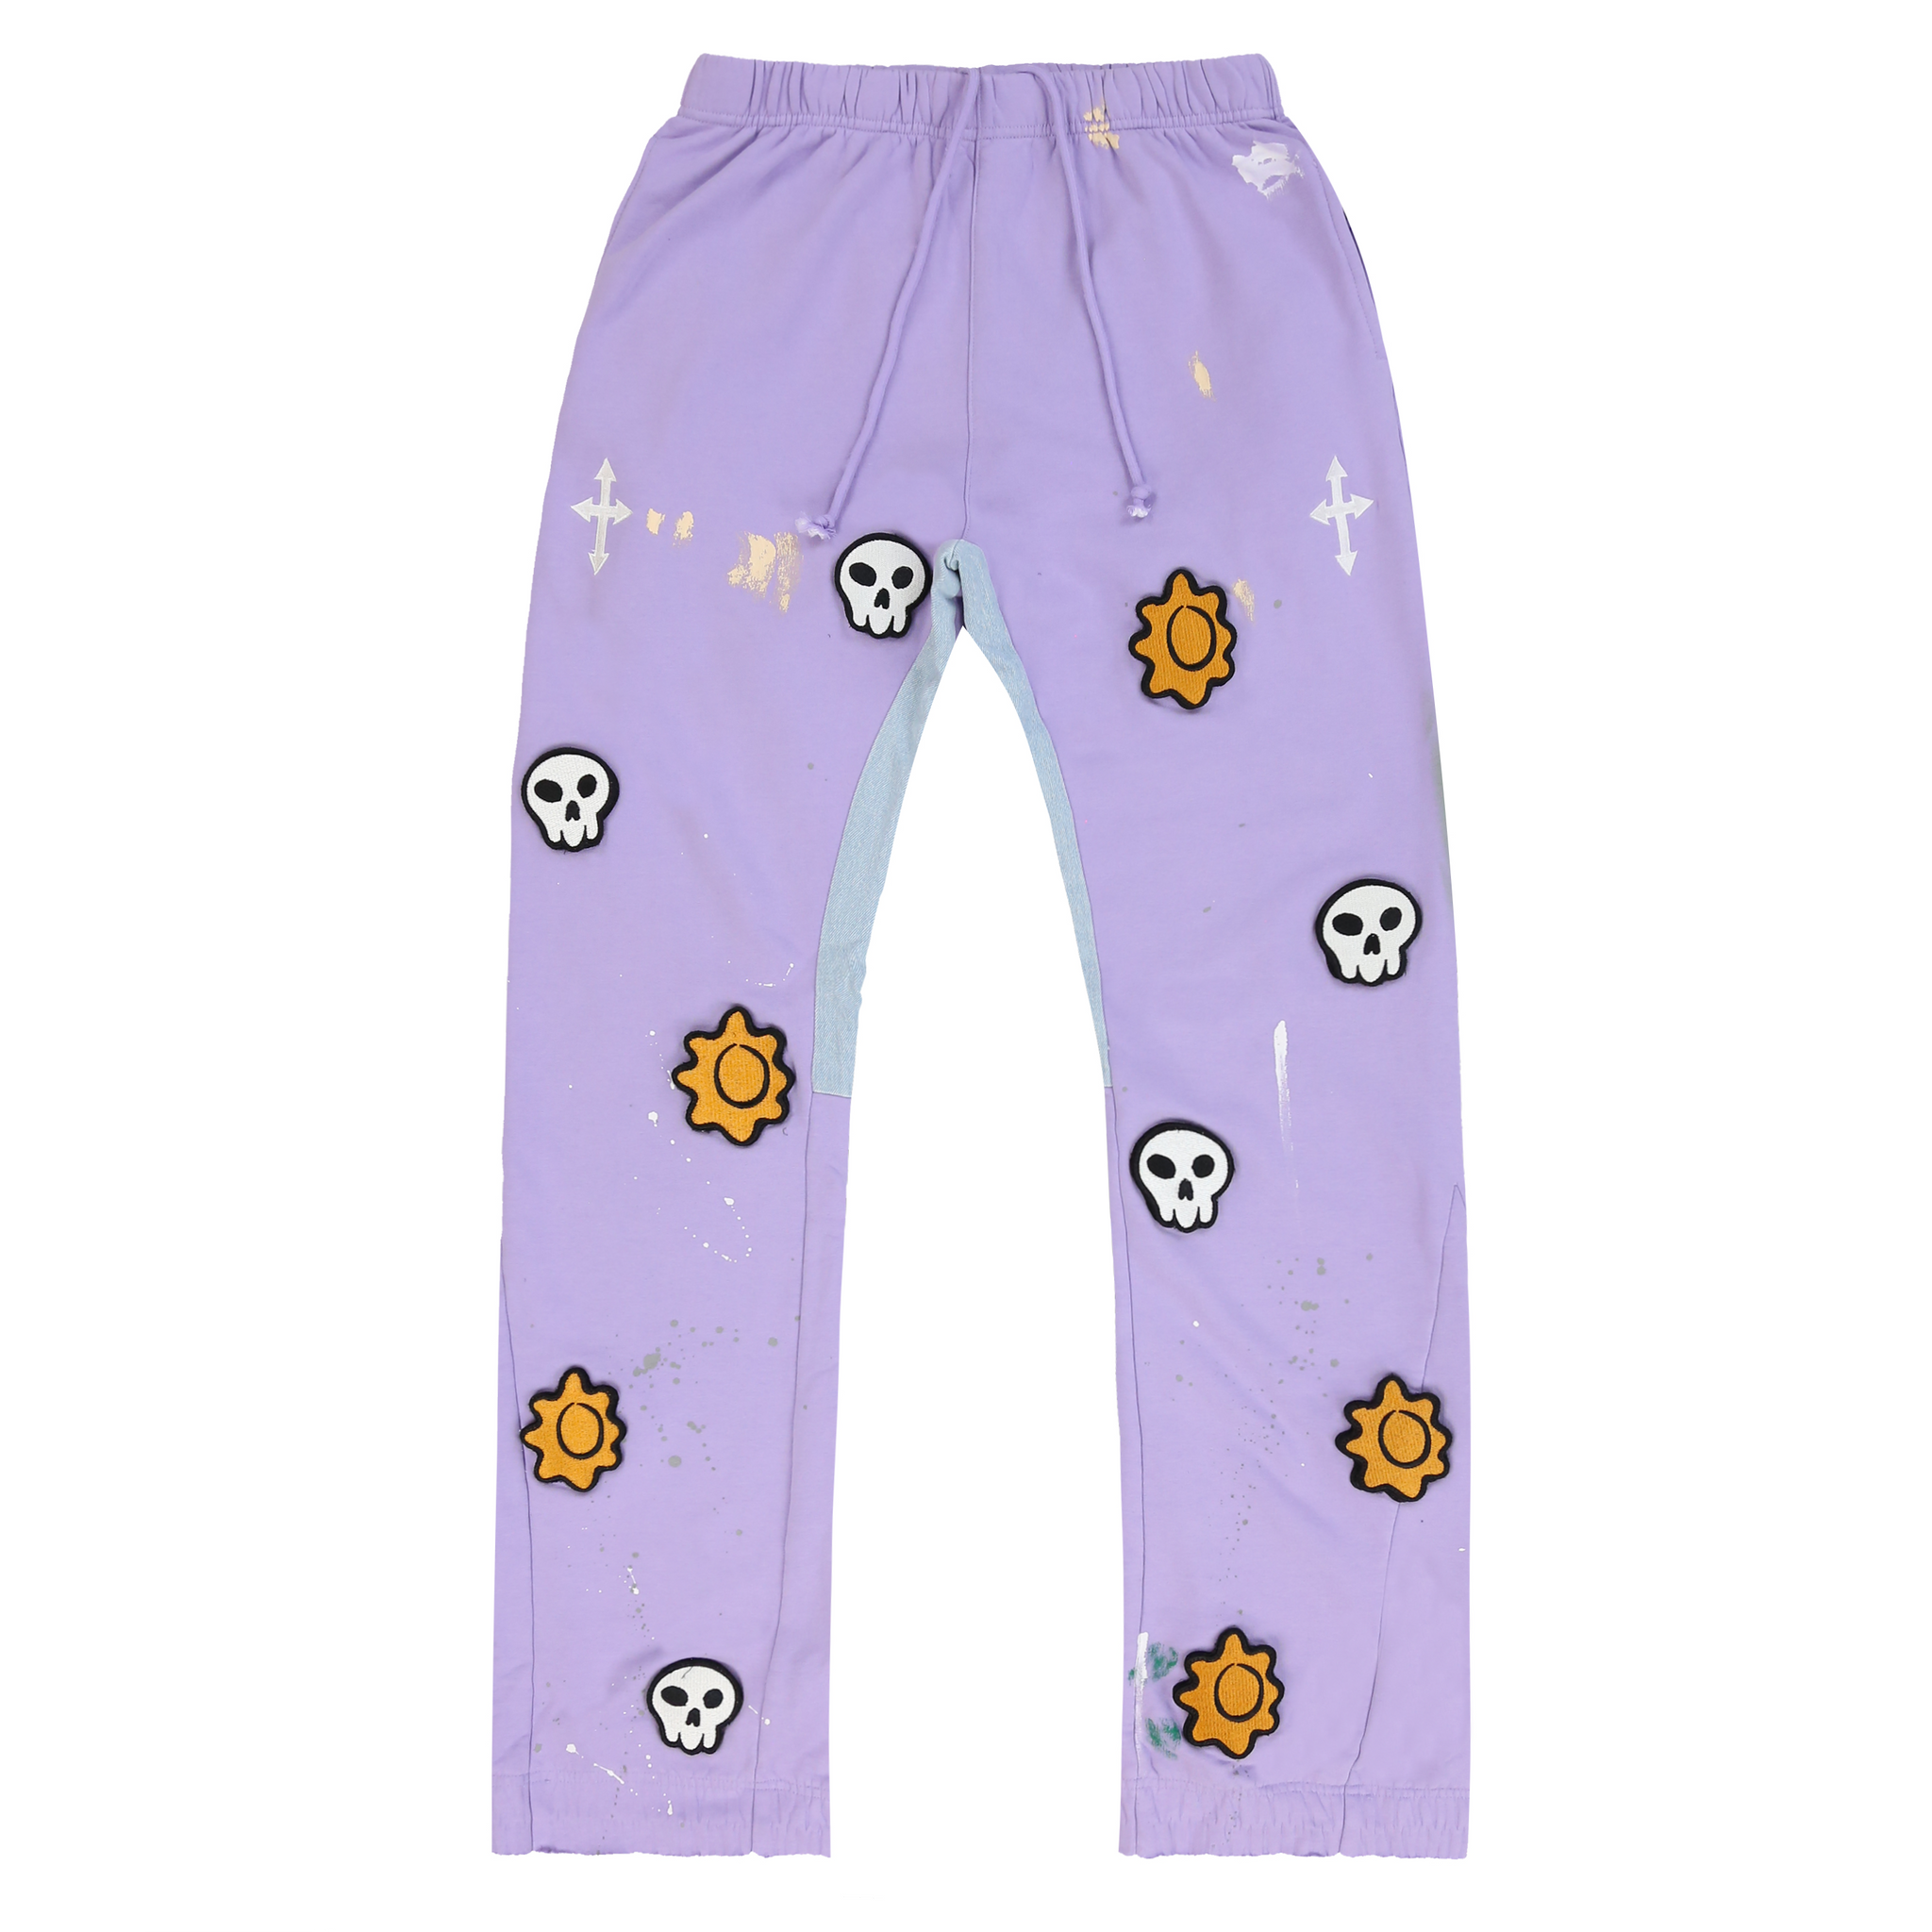 Glo Flare Pants (Lavender)